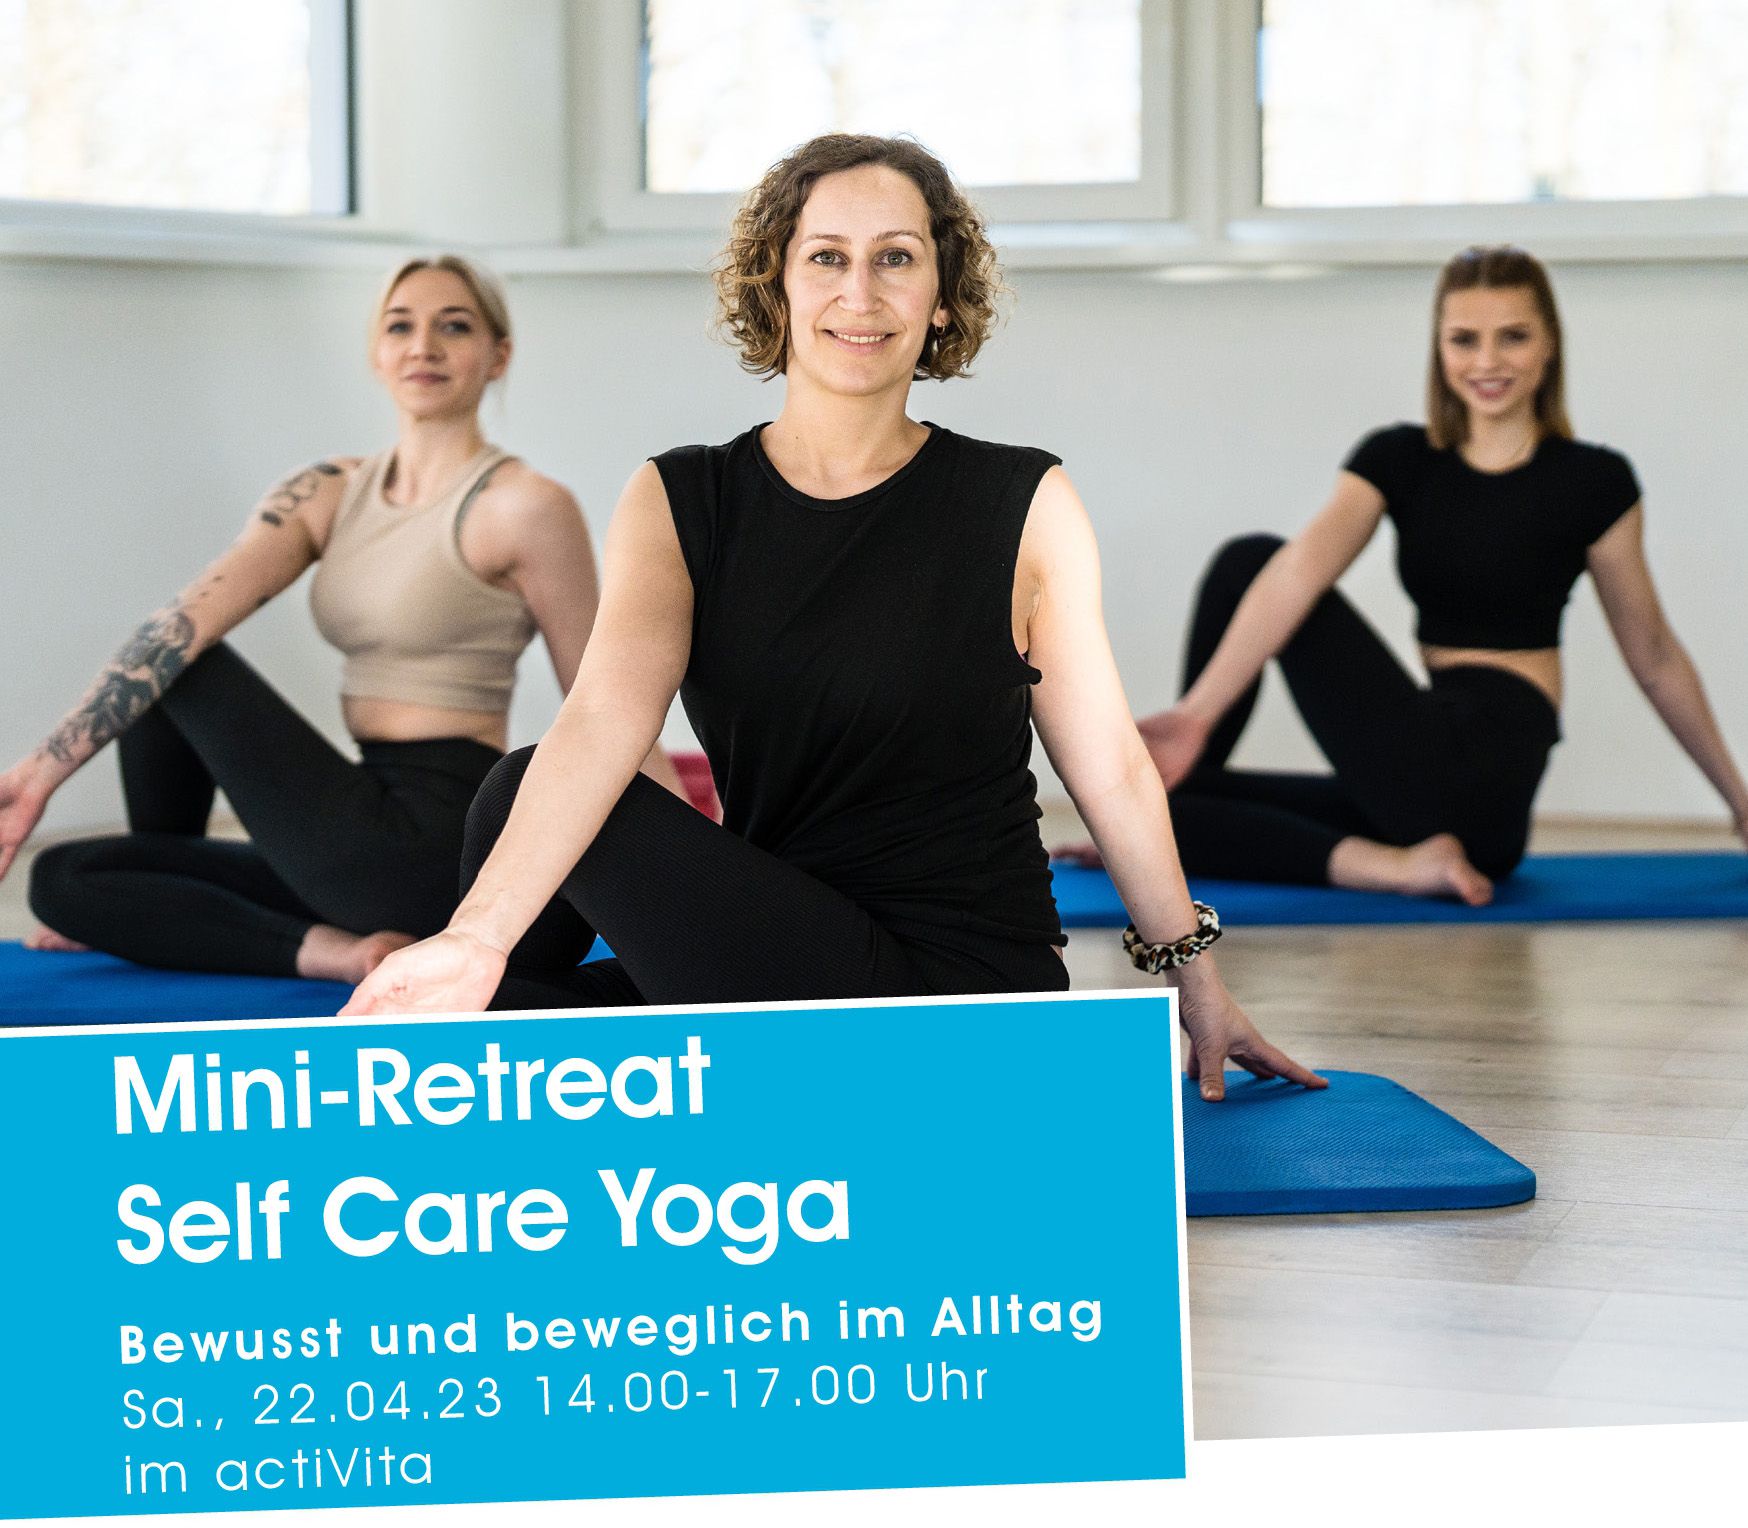 NEU: Yoga Mini-Retreat - Bewusst und beweglich im Alltag